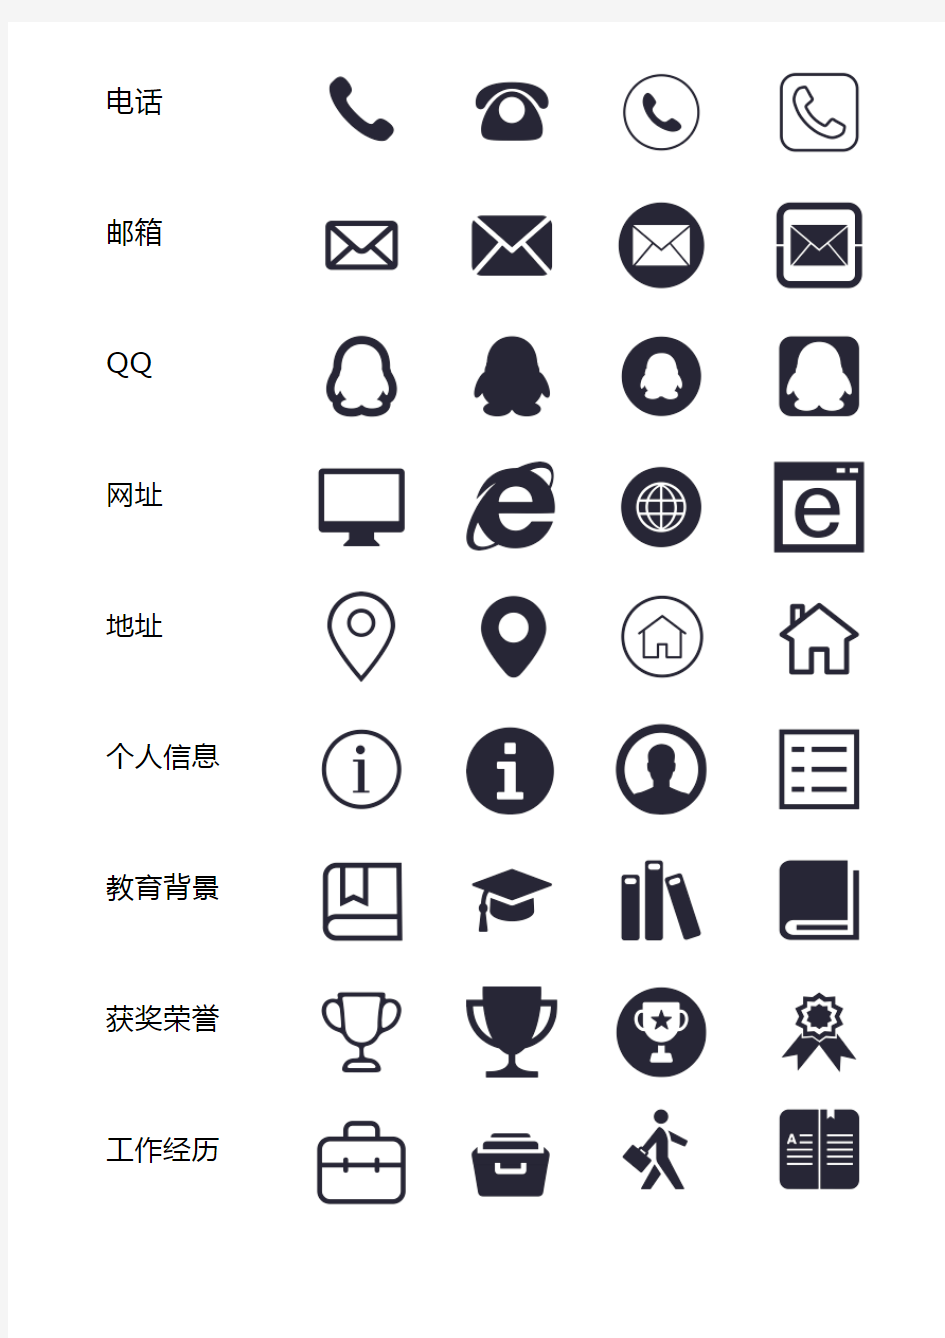 71.简历常用icon-Word简历模板图标